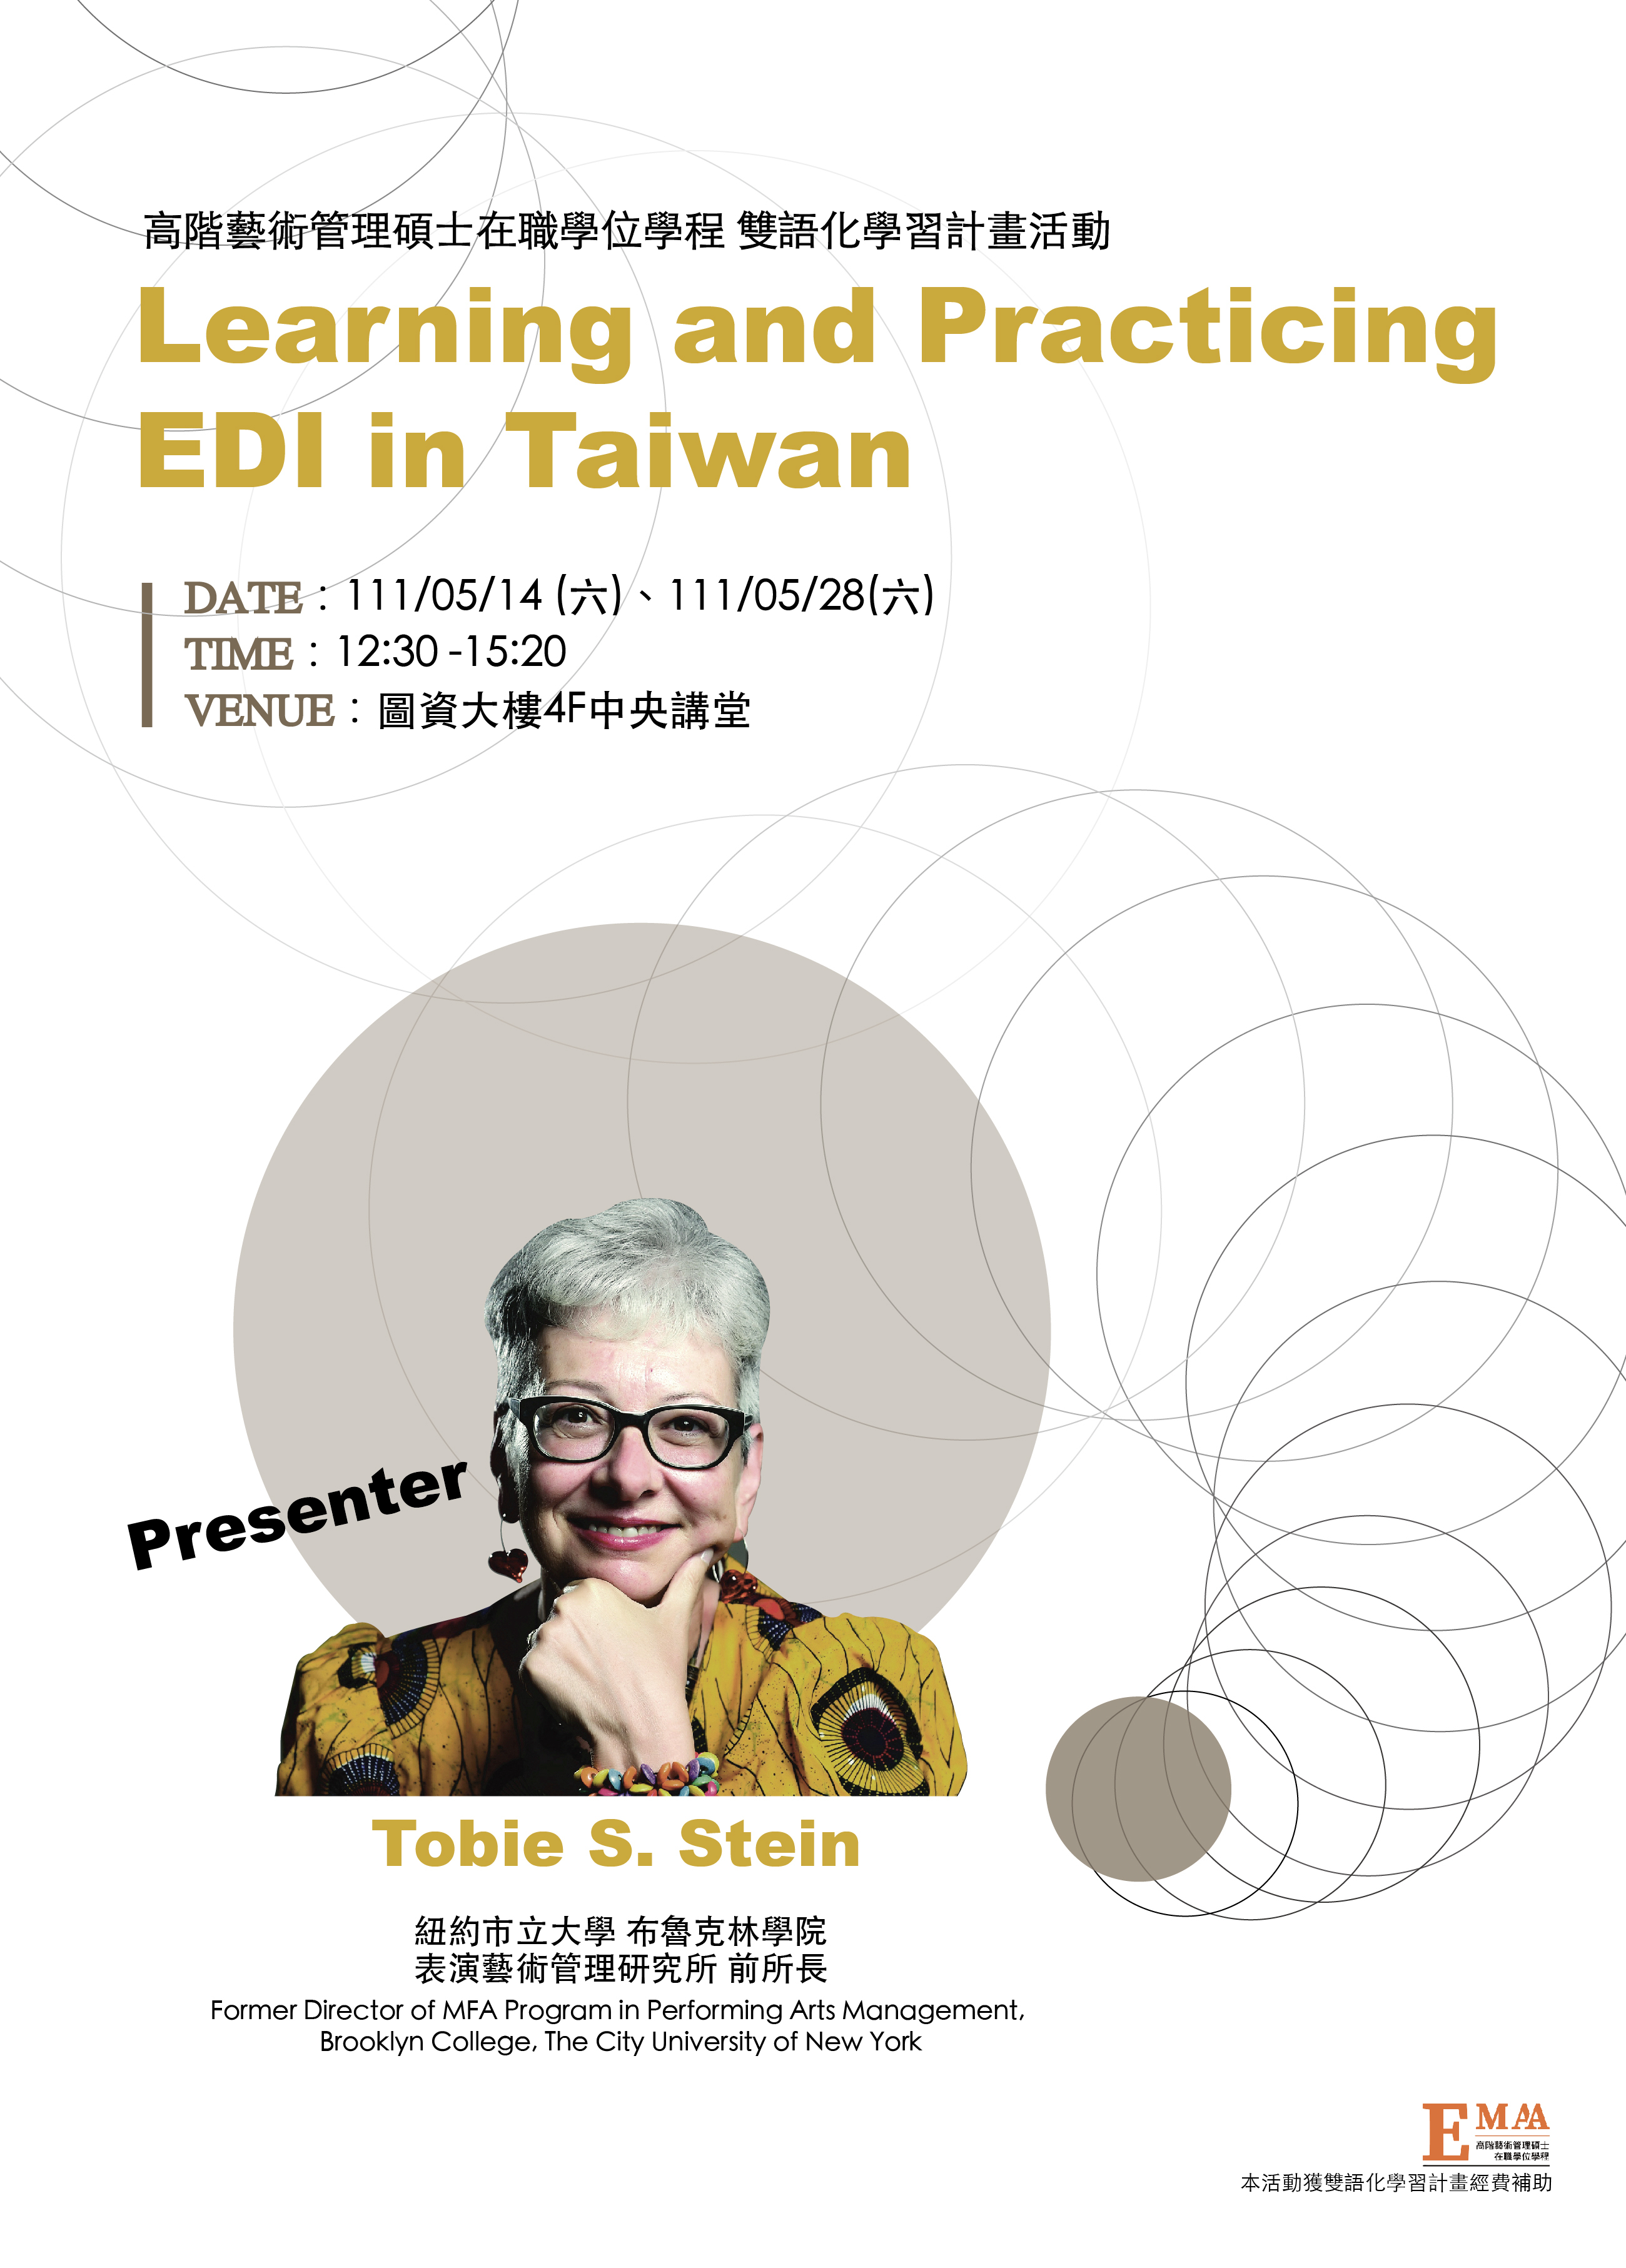 Learning and Practicing EDI in Taiwan.